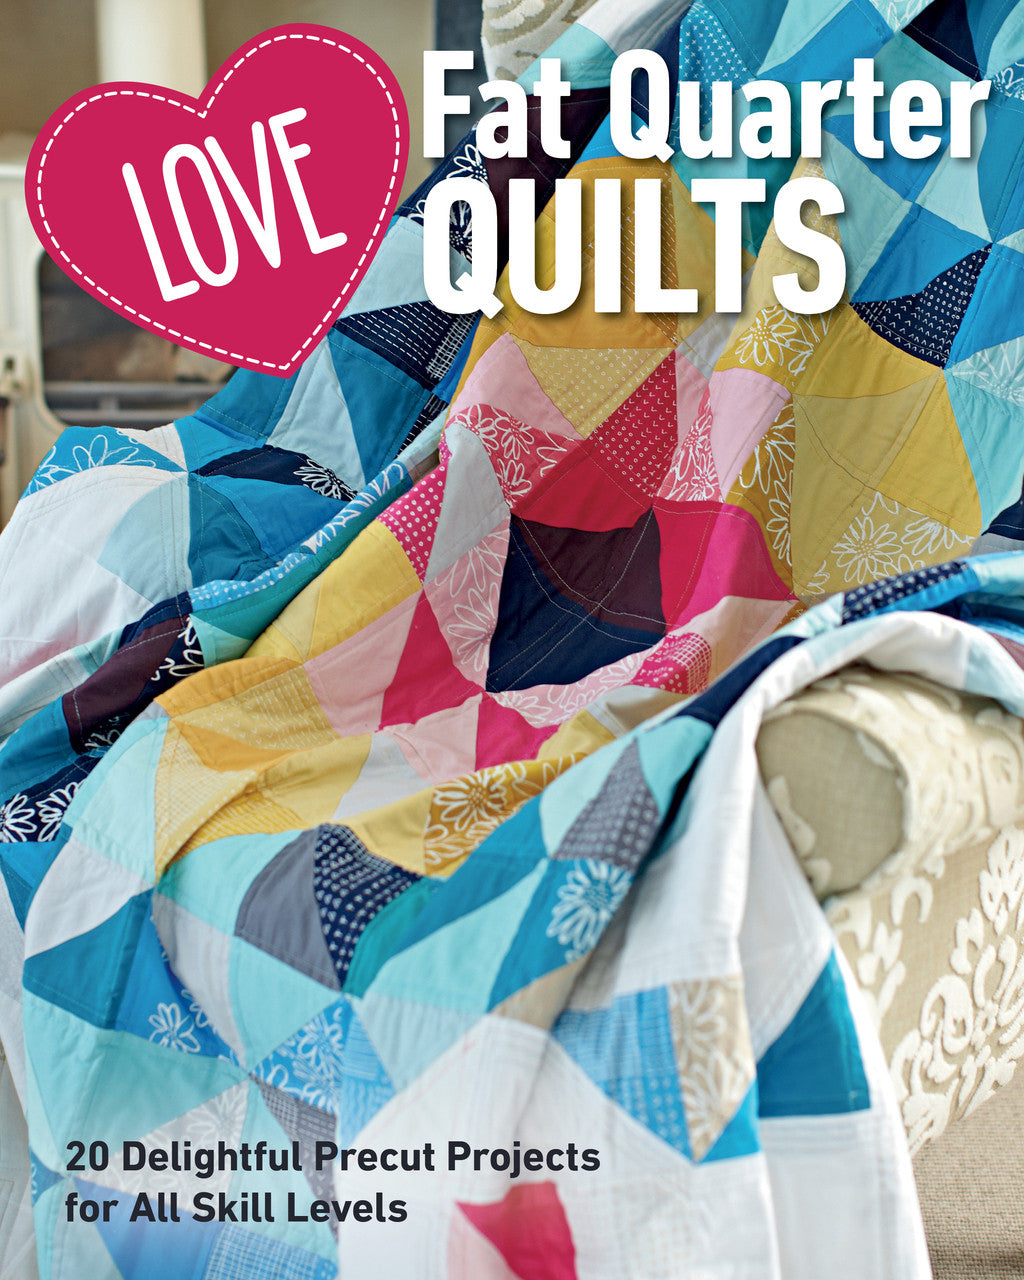 Best Quilting Books, Quilt Patterns